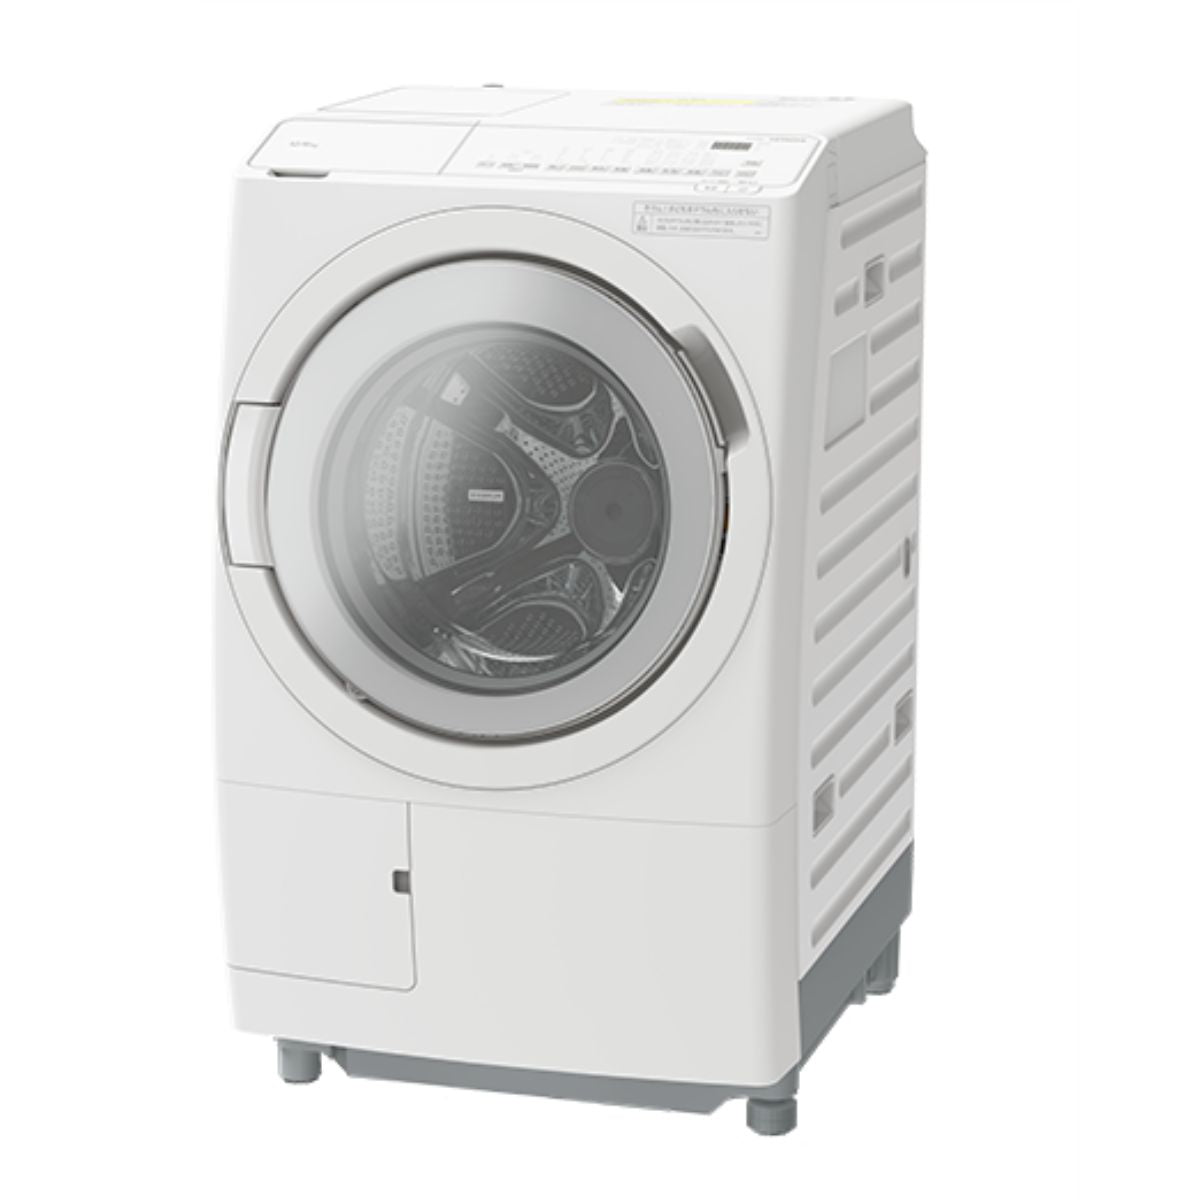 Máy Giặt Sấy Hitachi BD-SV120J, Giặt 12kg/Sấy 6kg | ĐỒ Nhật Nội Địa